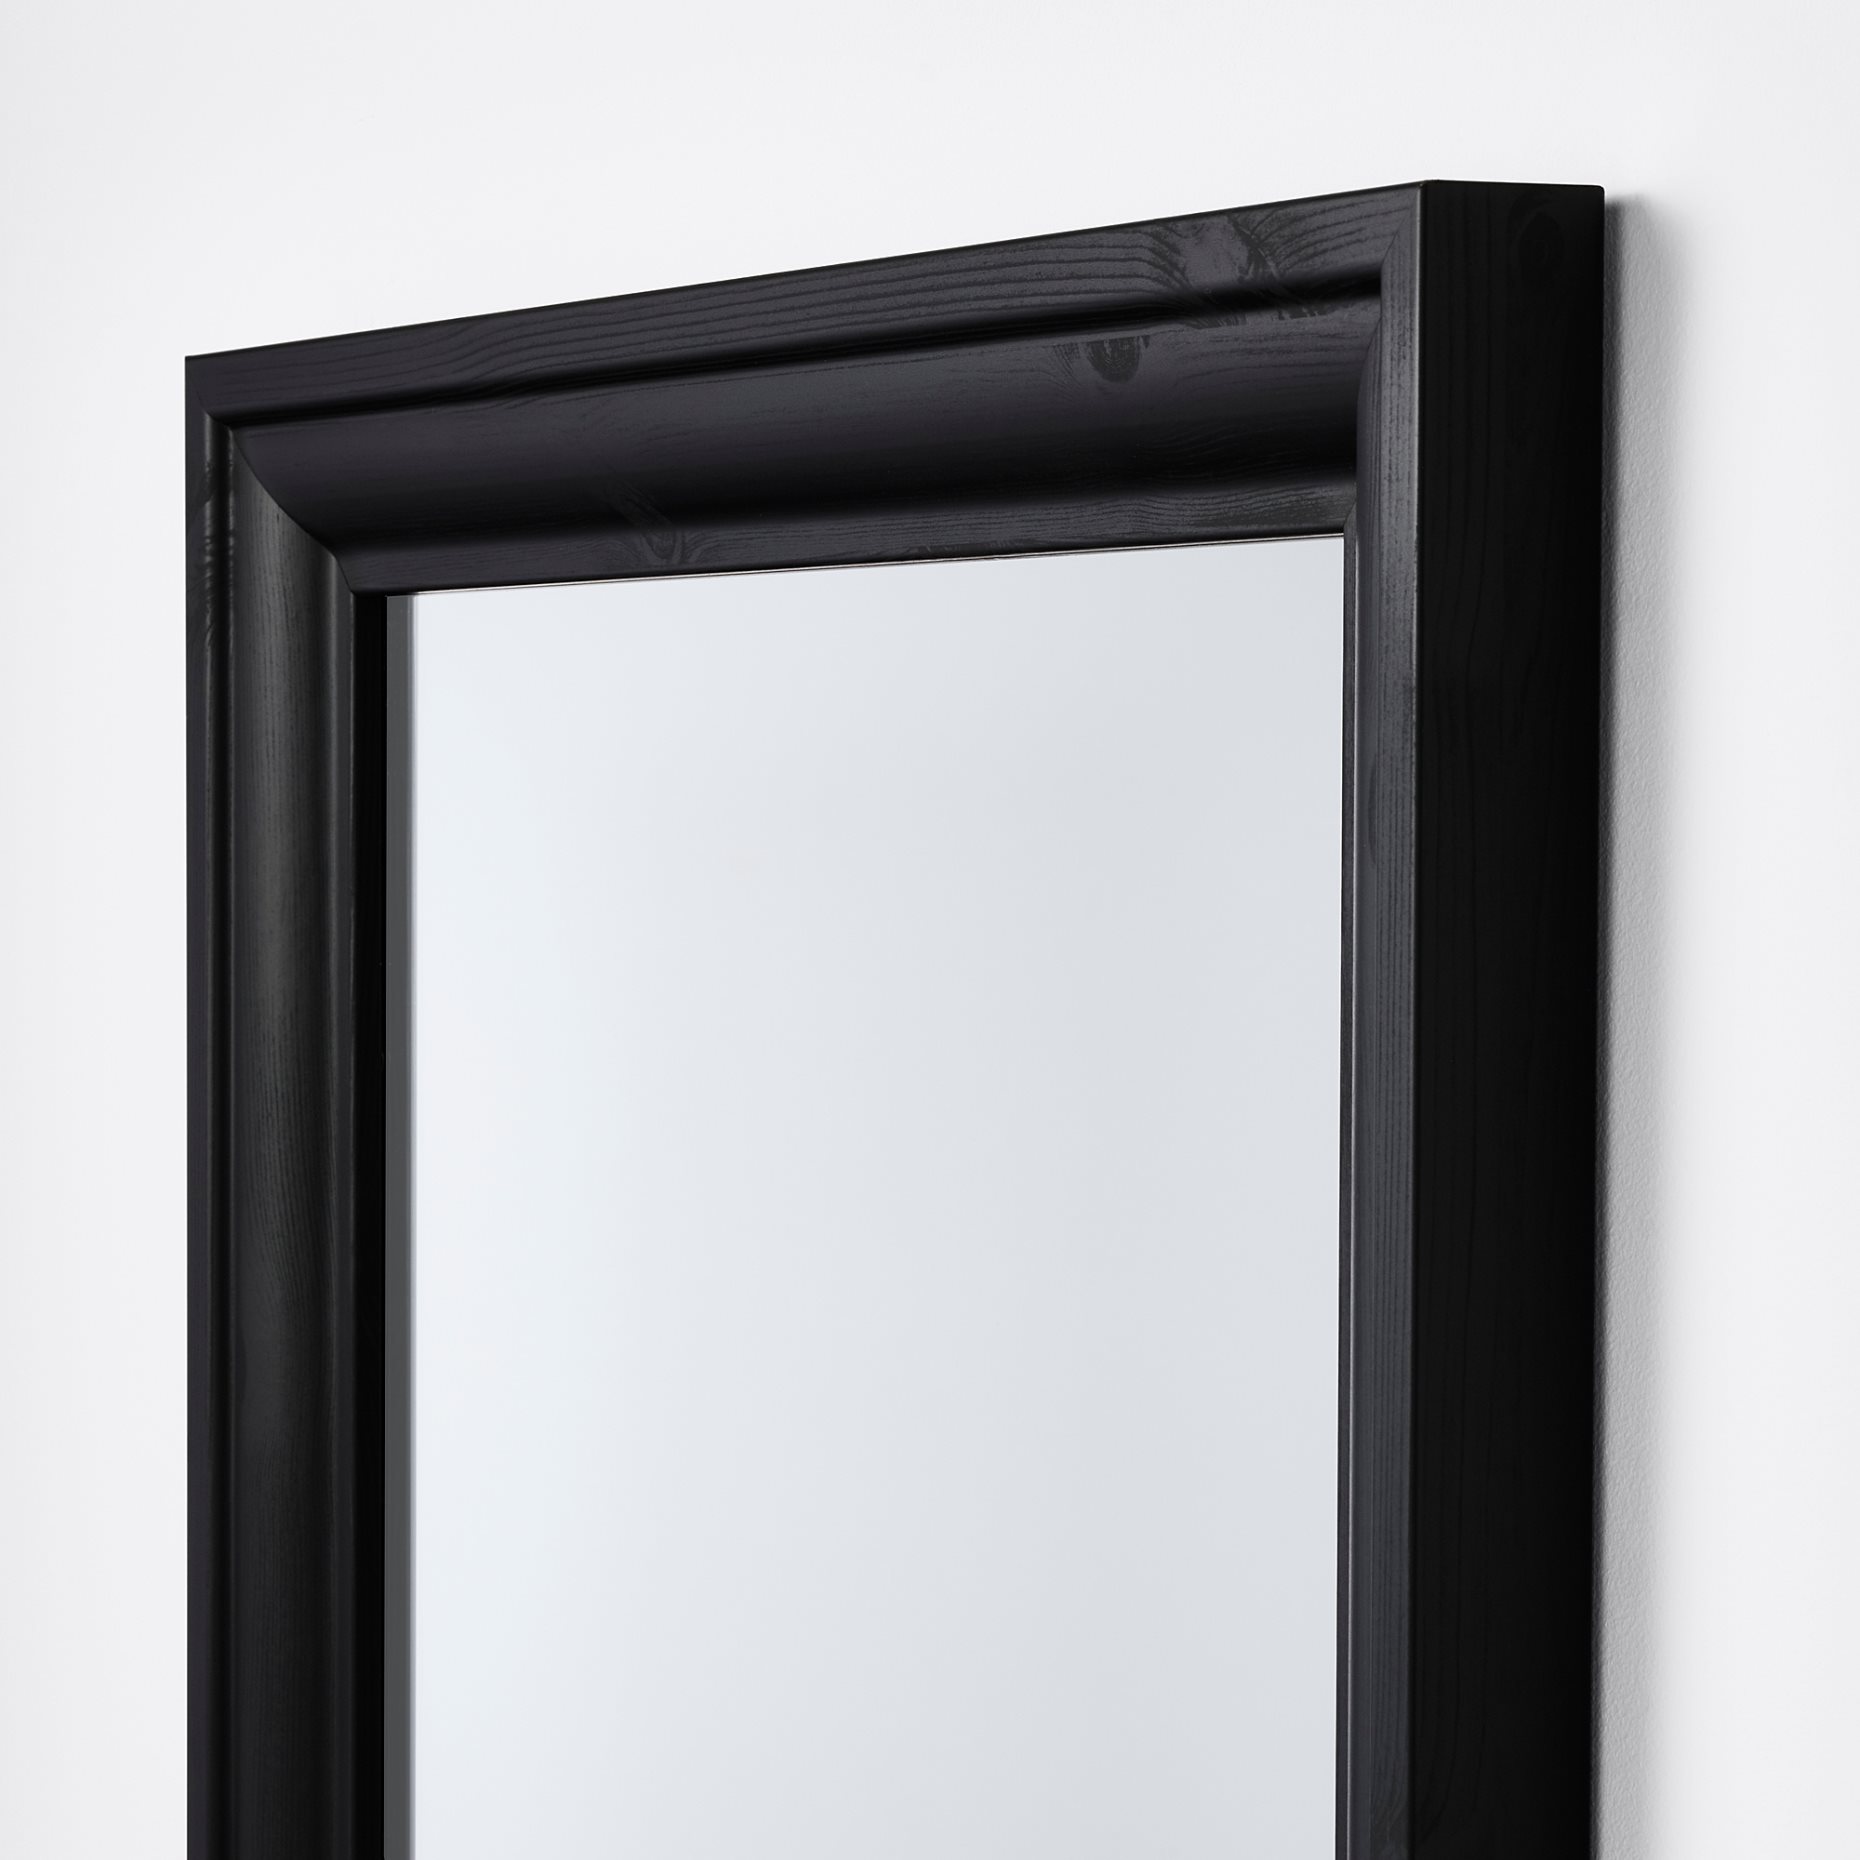 TOFTBYN, καθρέφτης, 65x85 cm, 304.591.48